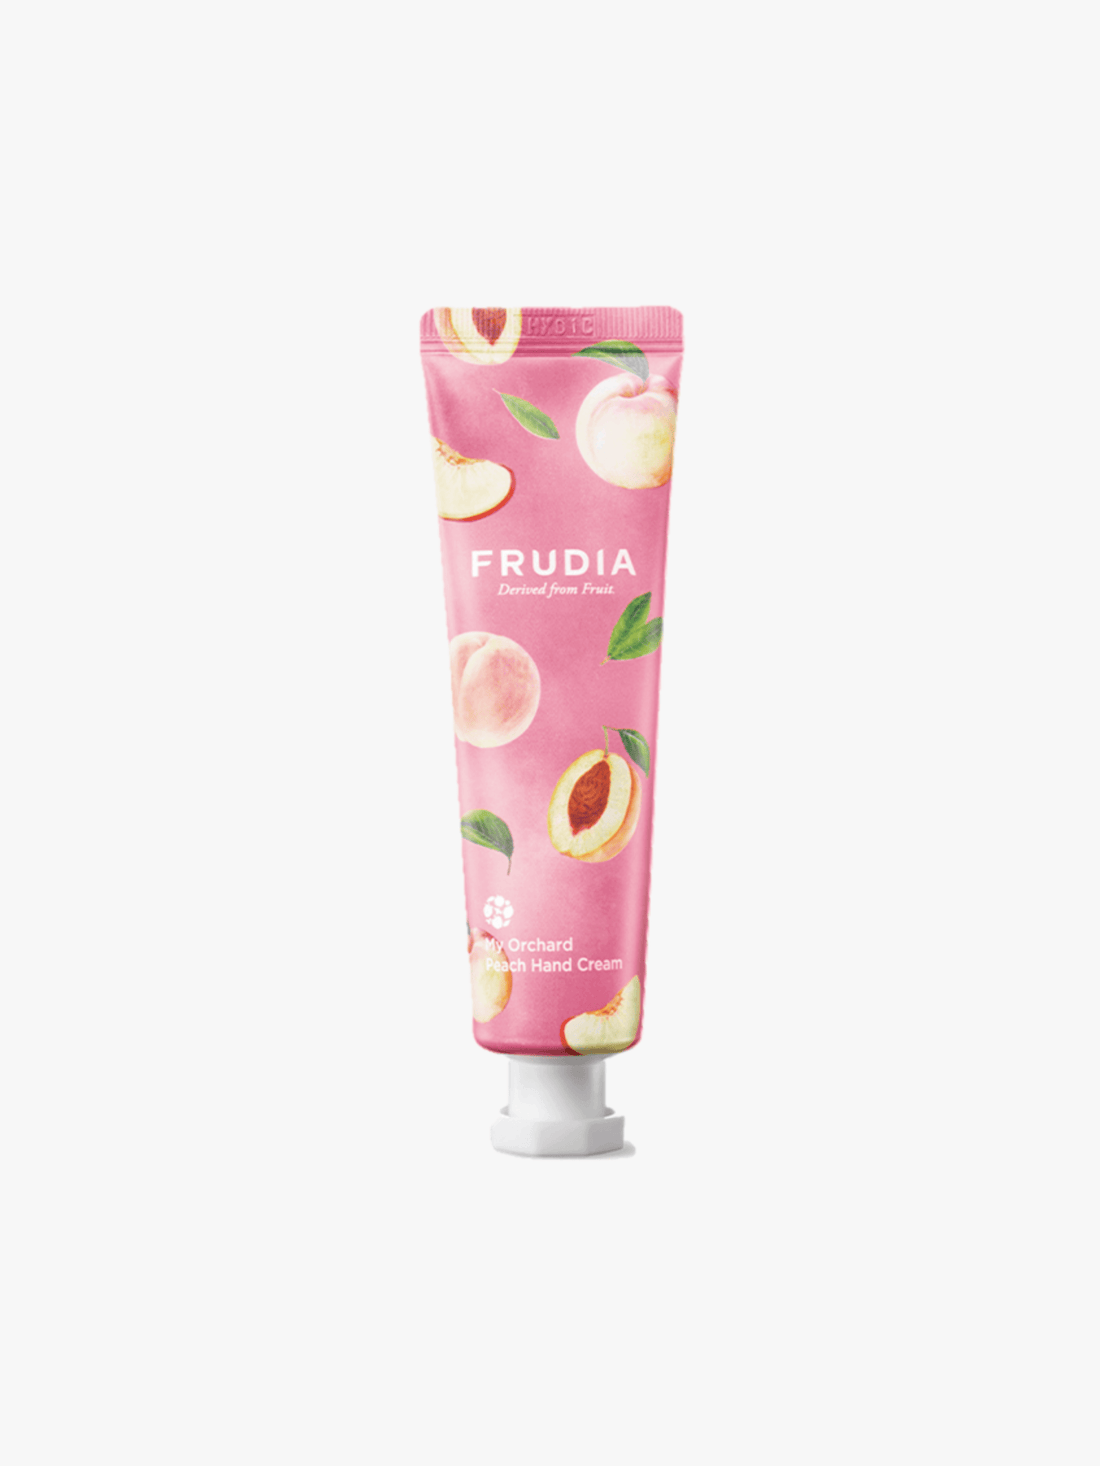 Frudia - Hand creams - My Orchard Hand Cream Peach